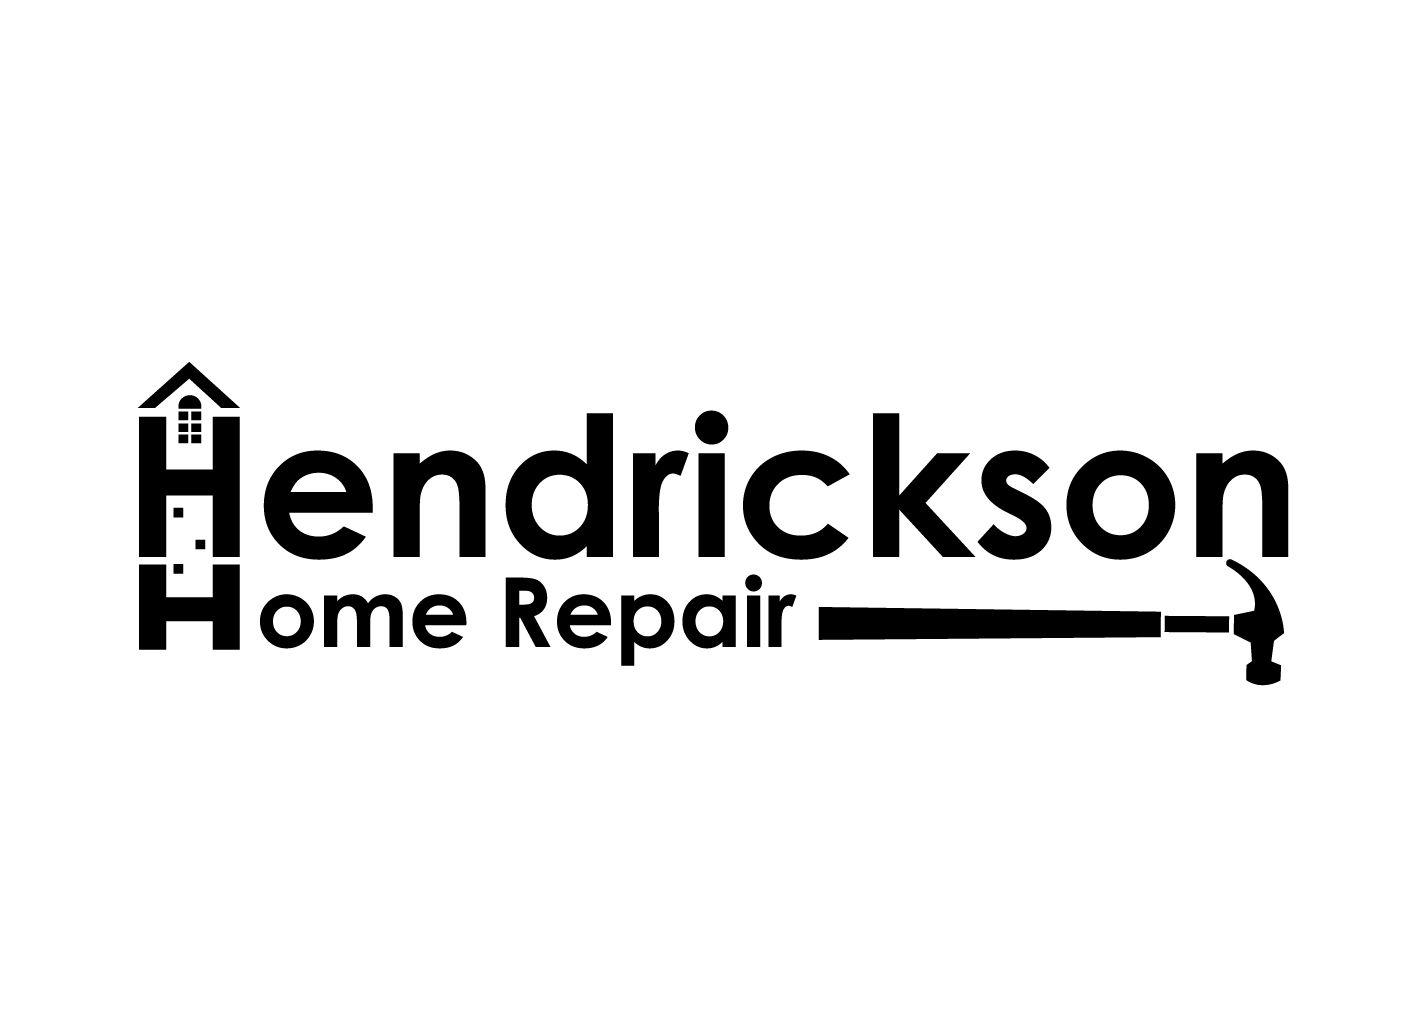 Hendrickson Logo